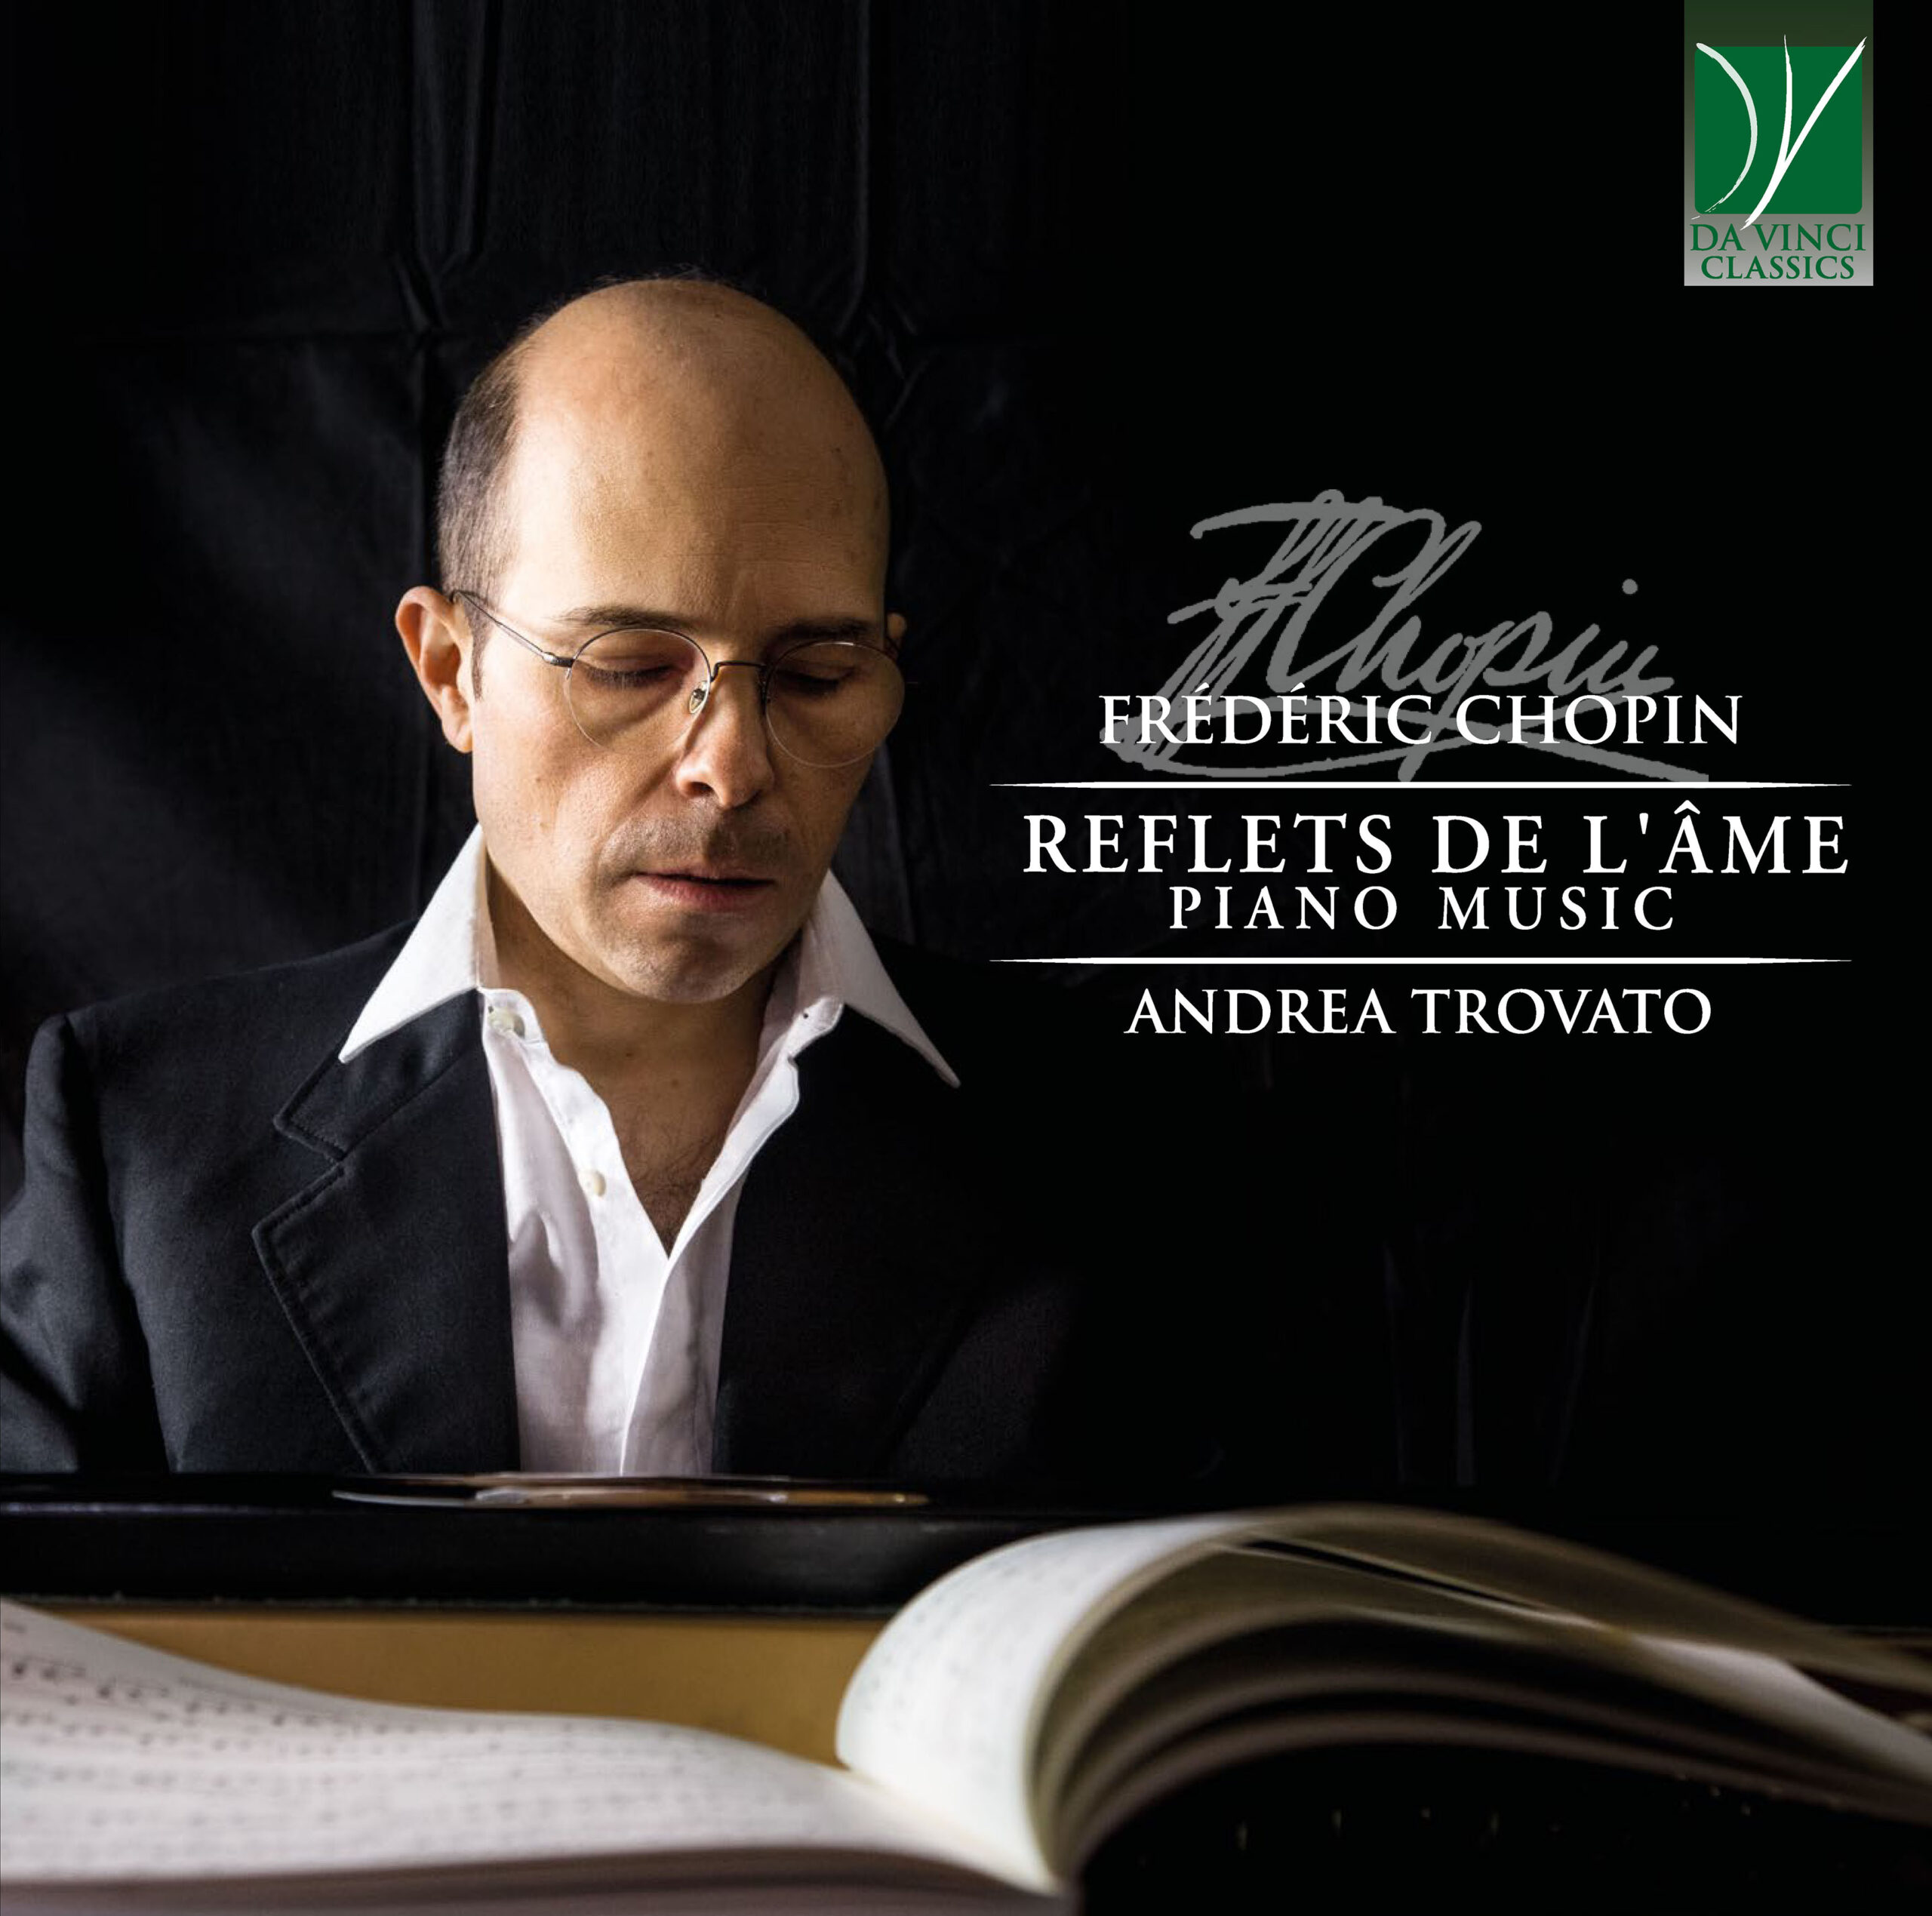 CD “Frédéric Chopin: Reflets de l’âme (Piano Music)” (Da Vinci Classics 2021)